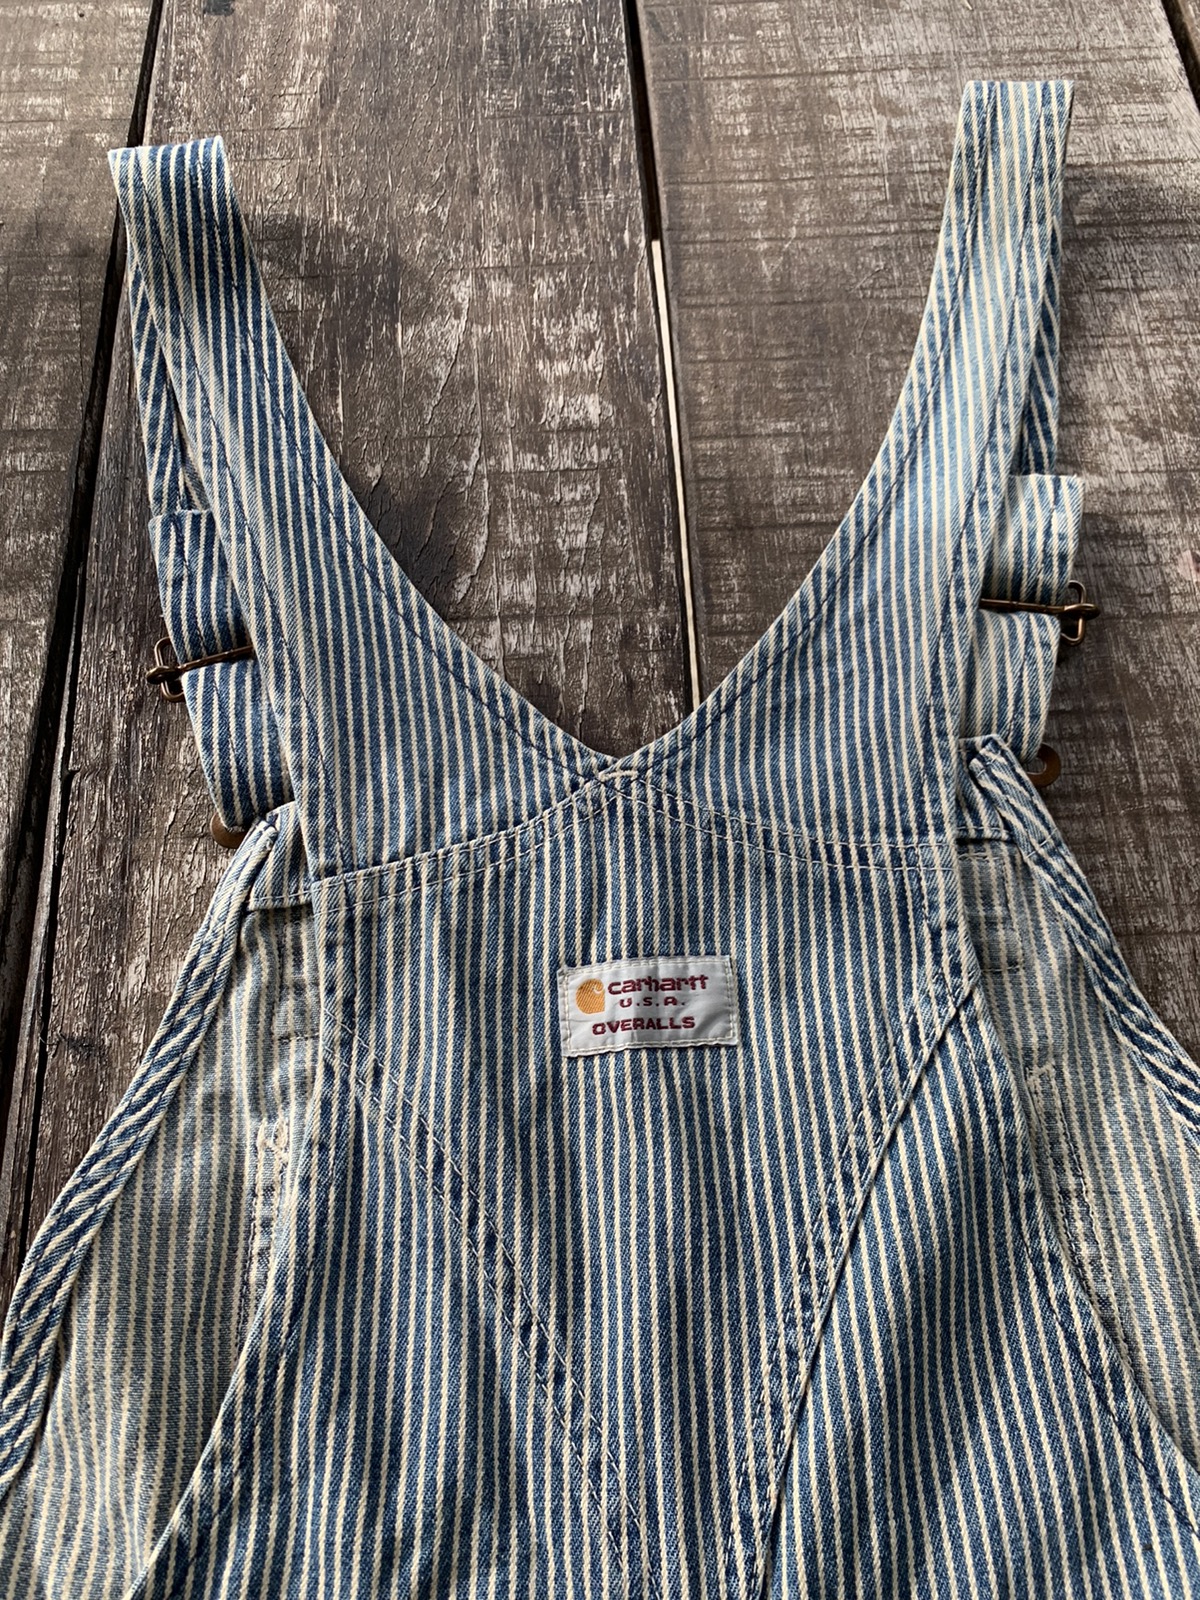 Vintage - RARE 💥 carhatt overalls nice design - 4